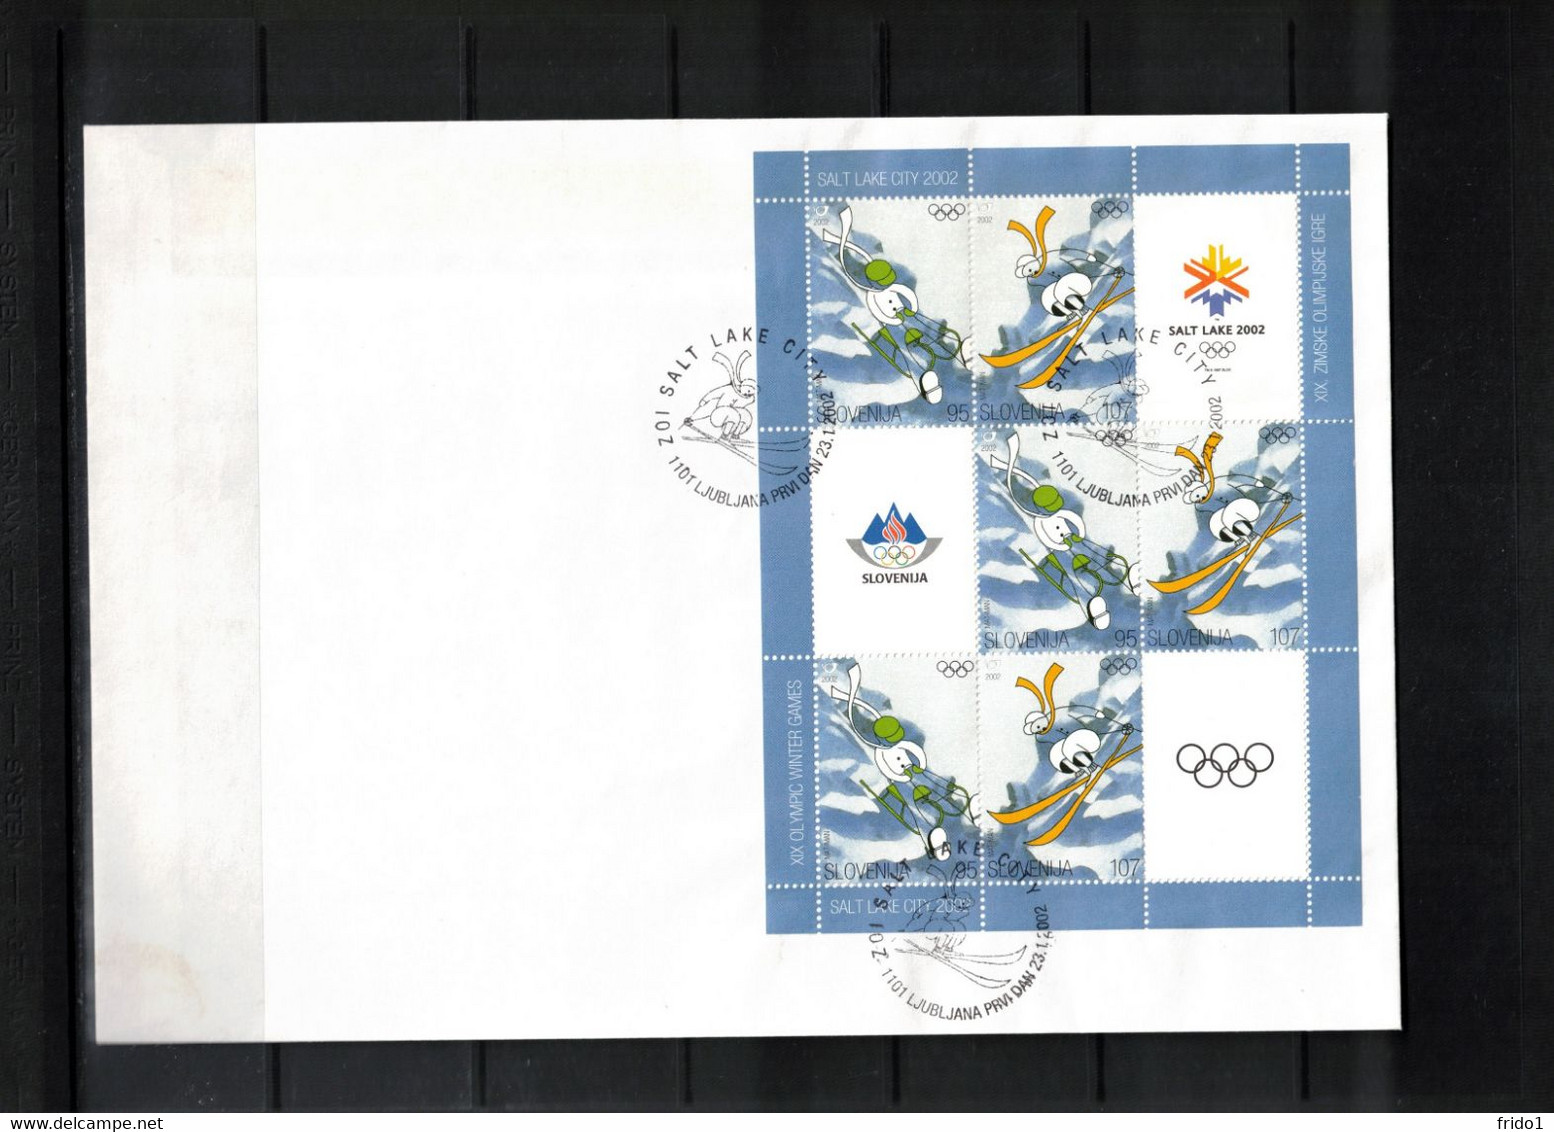 Slowenien / Slovenia 2002 Olympic Games Salt Lake City Complete Sheet FDC - Winter 2002: Salt Lake City